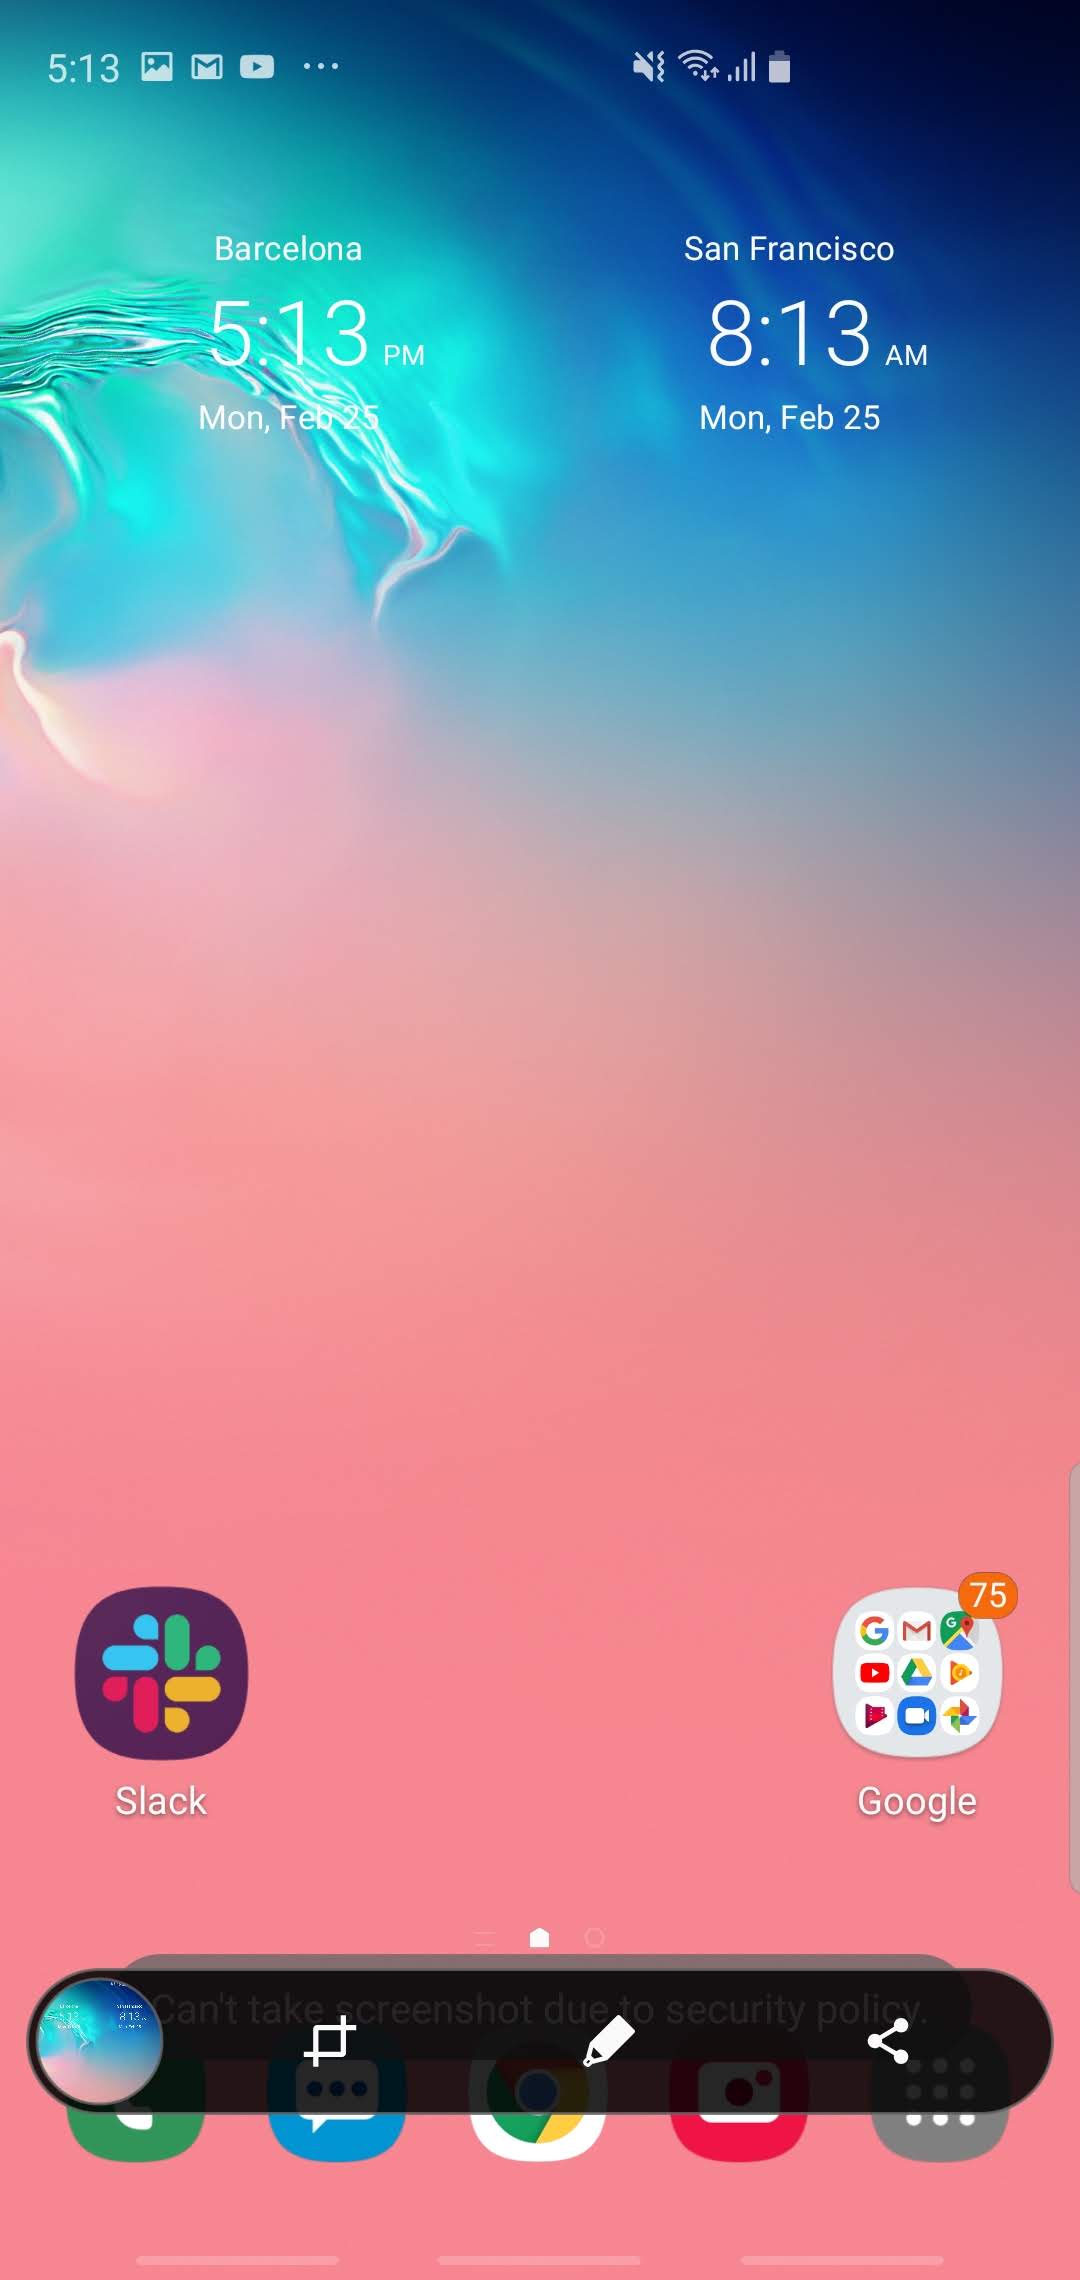 Samsung Galaxy S10 Plus home screen screenshot